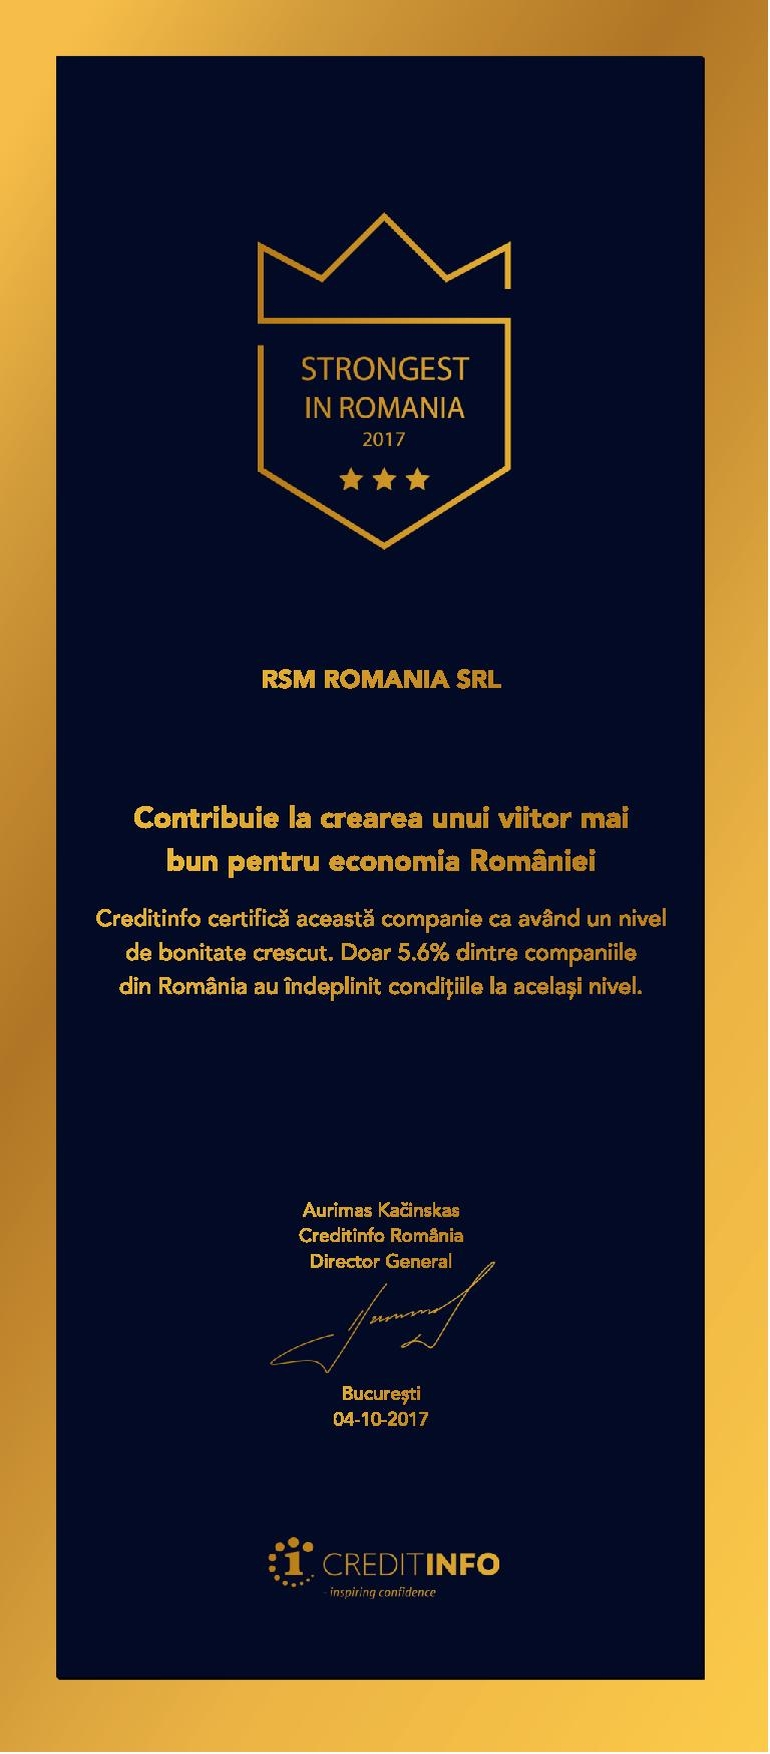 rsm_romania_srl_certificat_ro-page-001.jpg